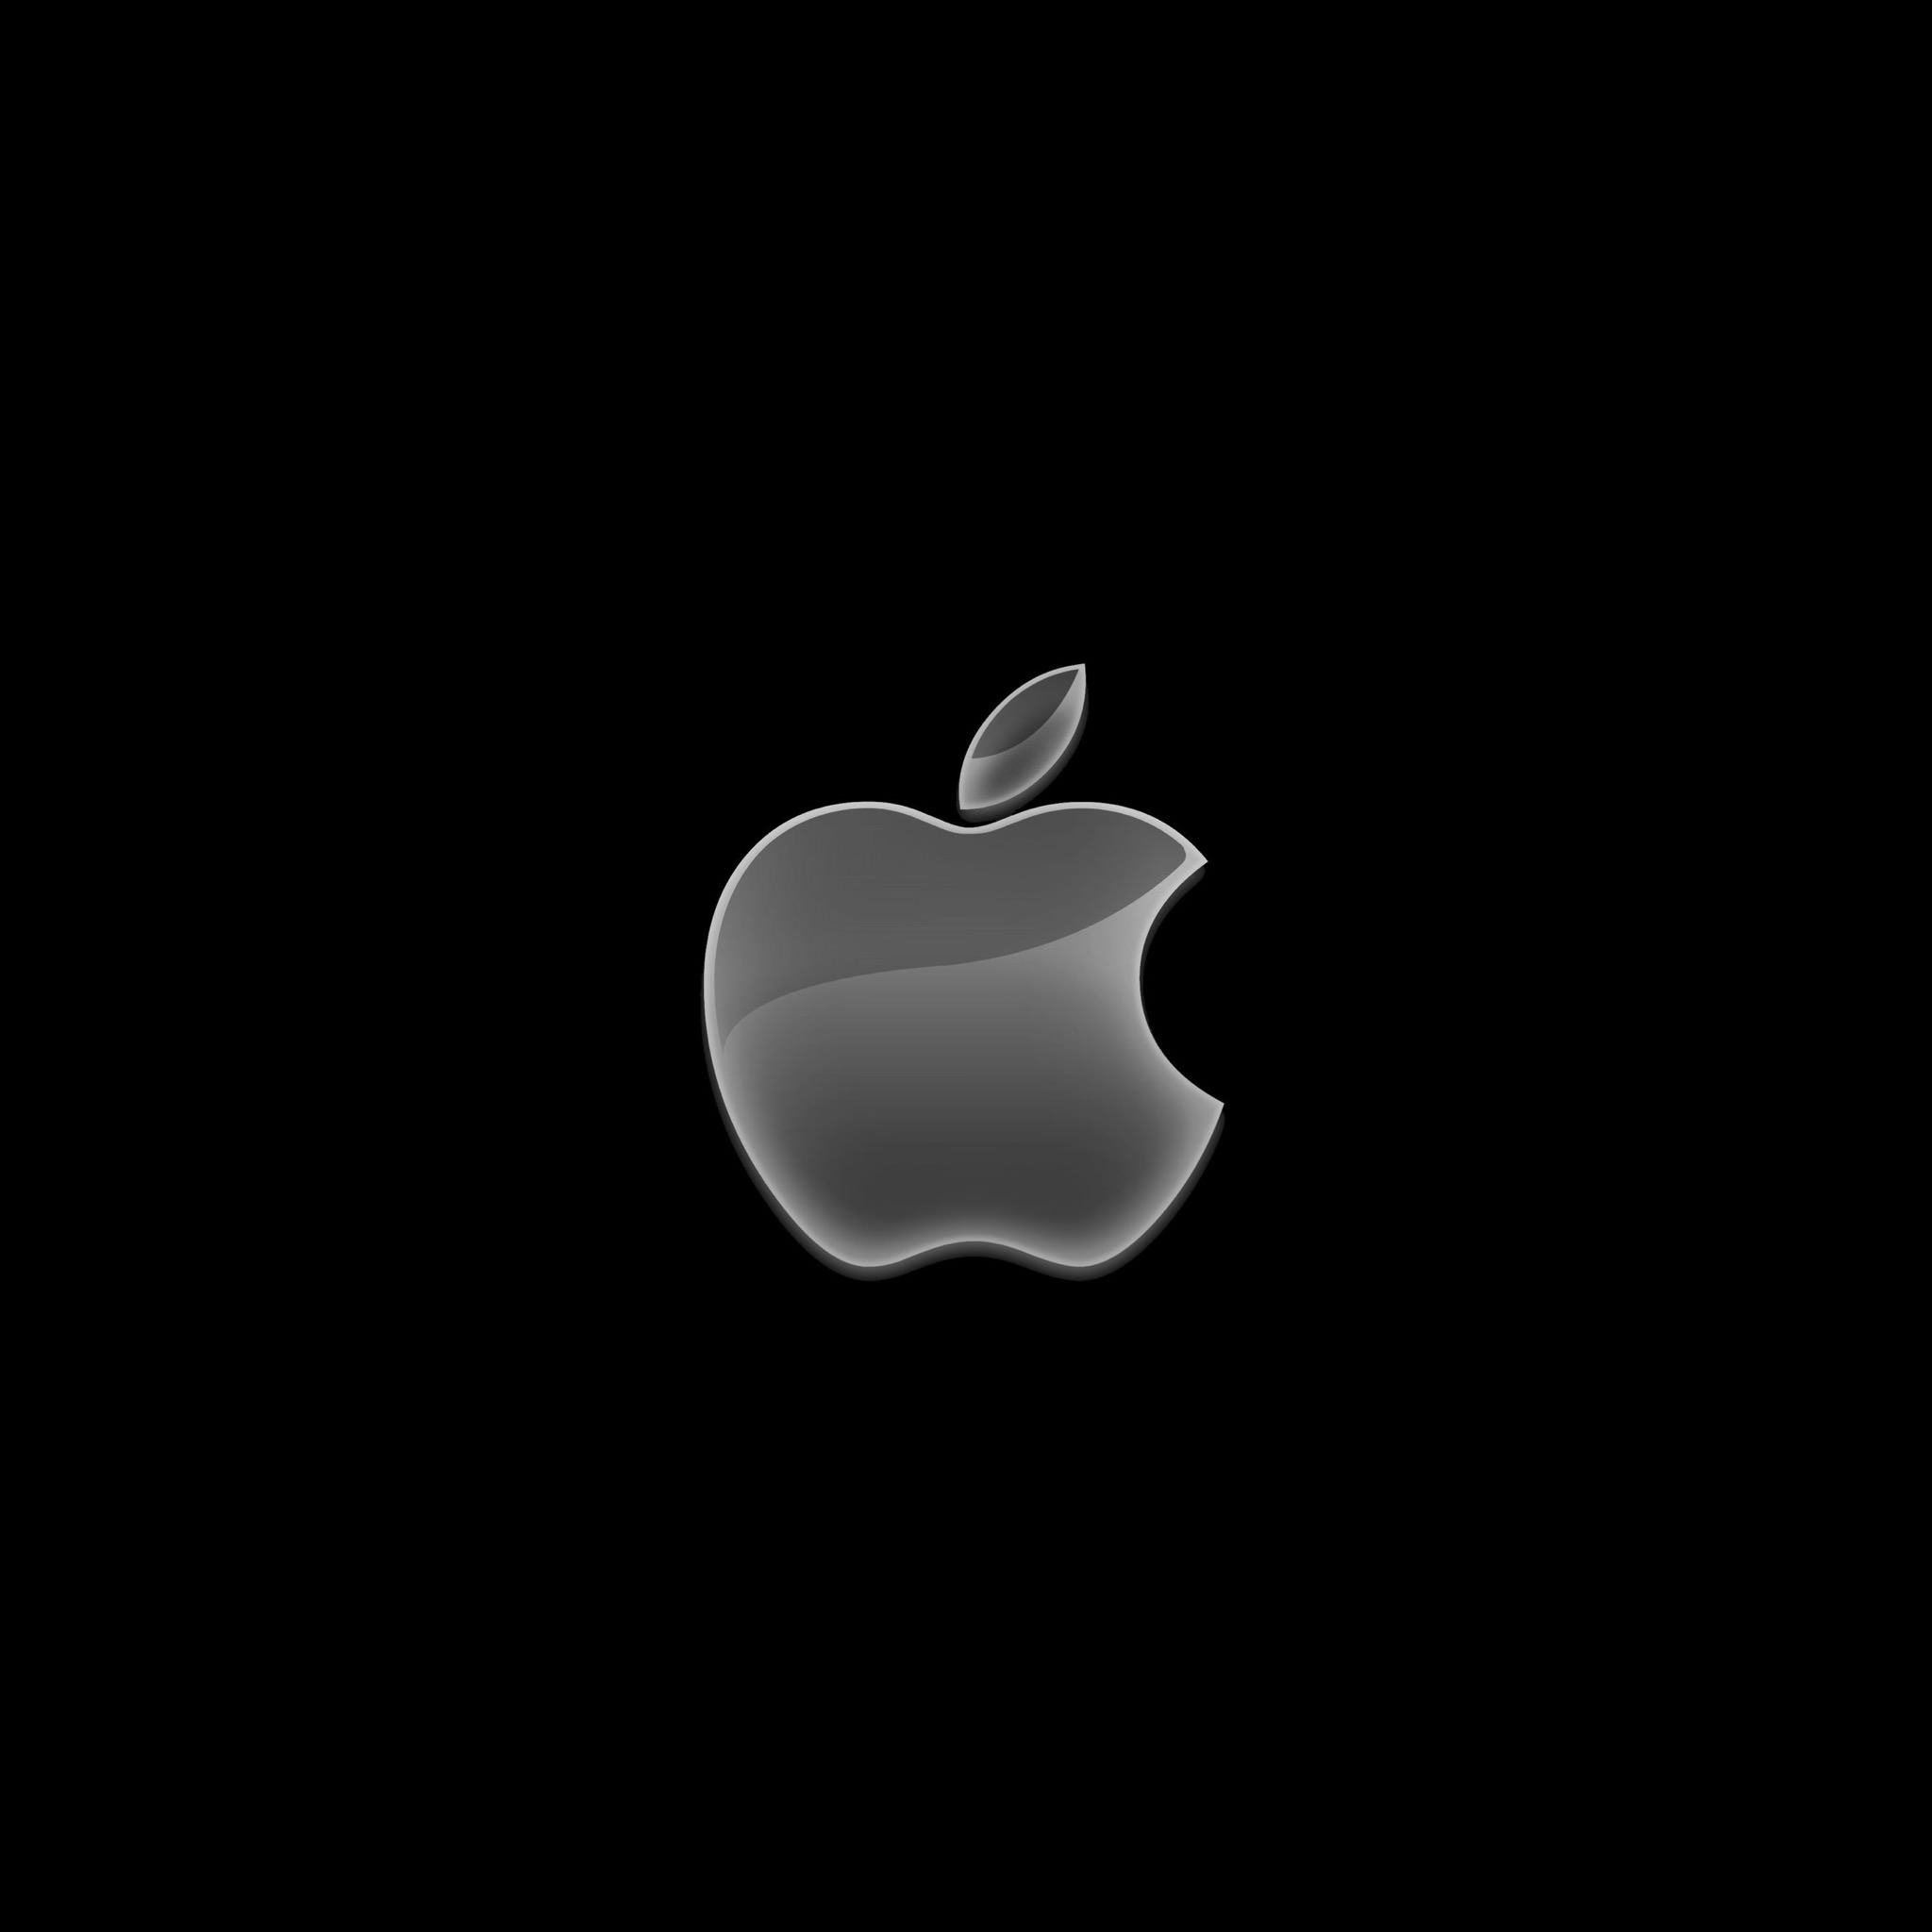 Apple logo black cool | wallpaper.sc iPad